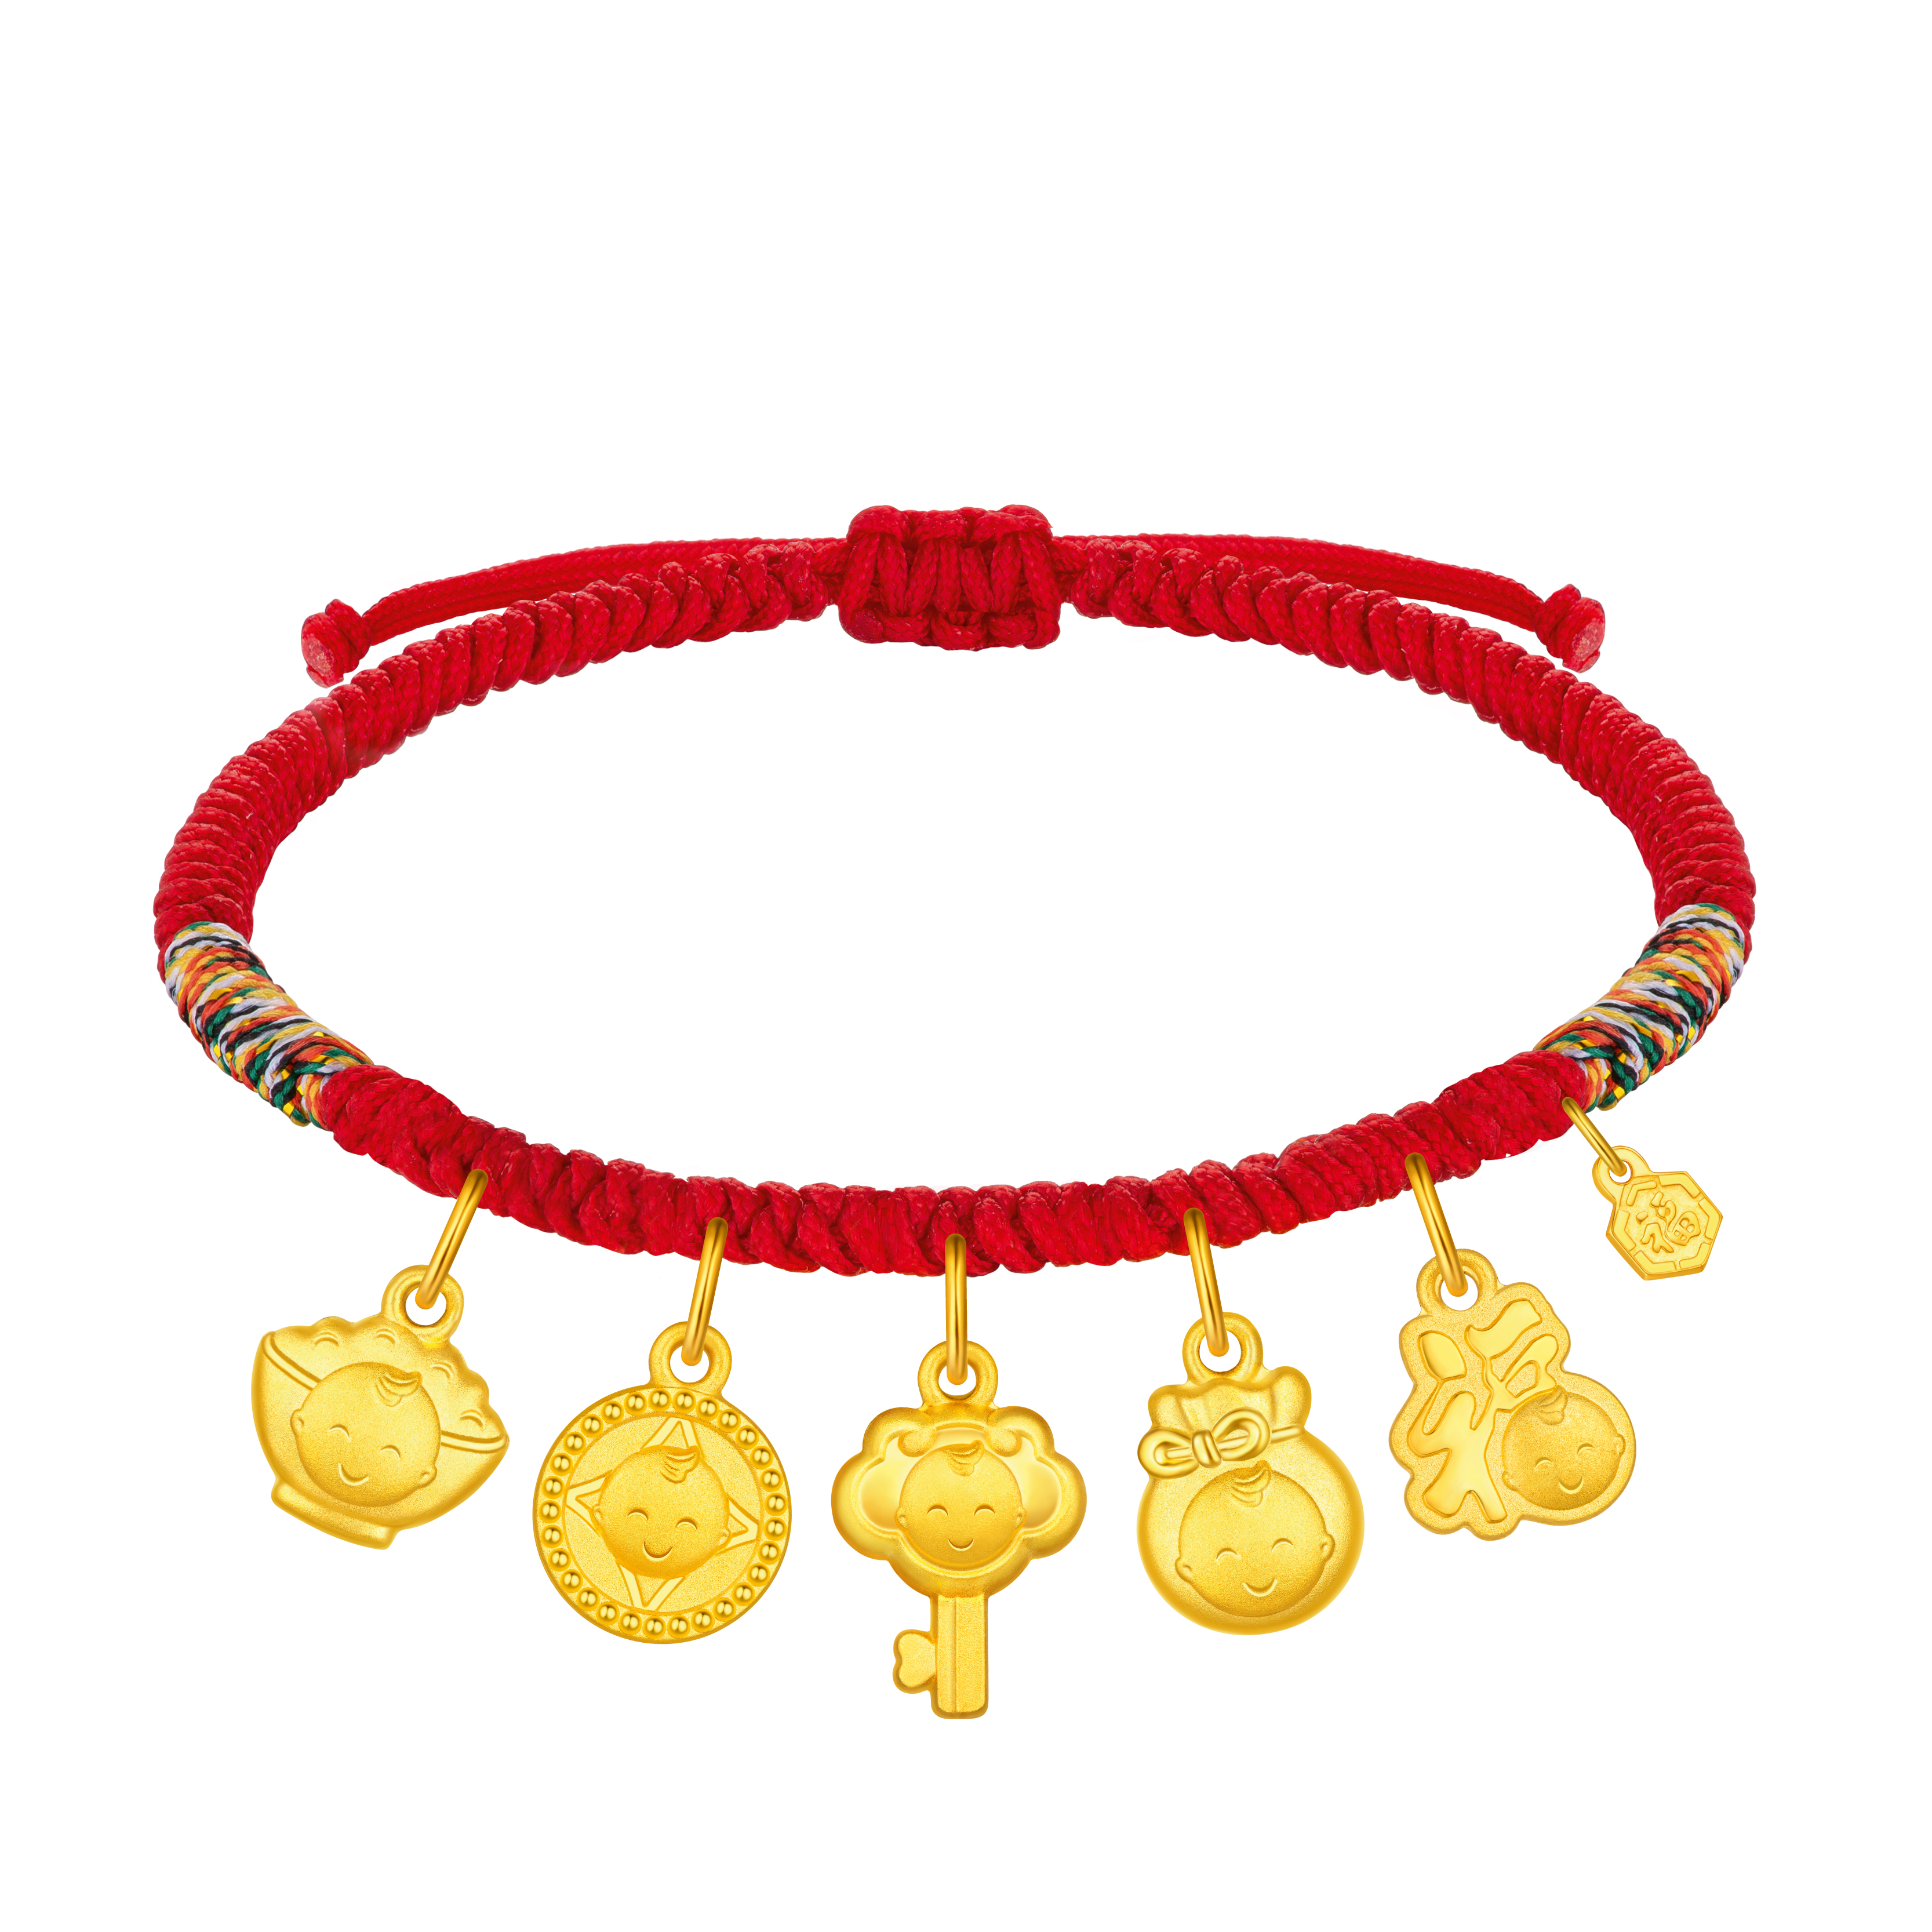 Hugging Family Ka ka “Auspicious Treasures” Gold Cord Bracelet